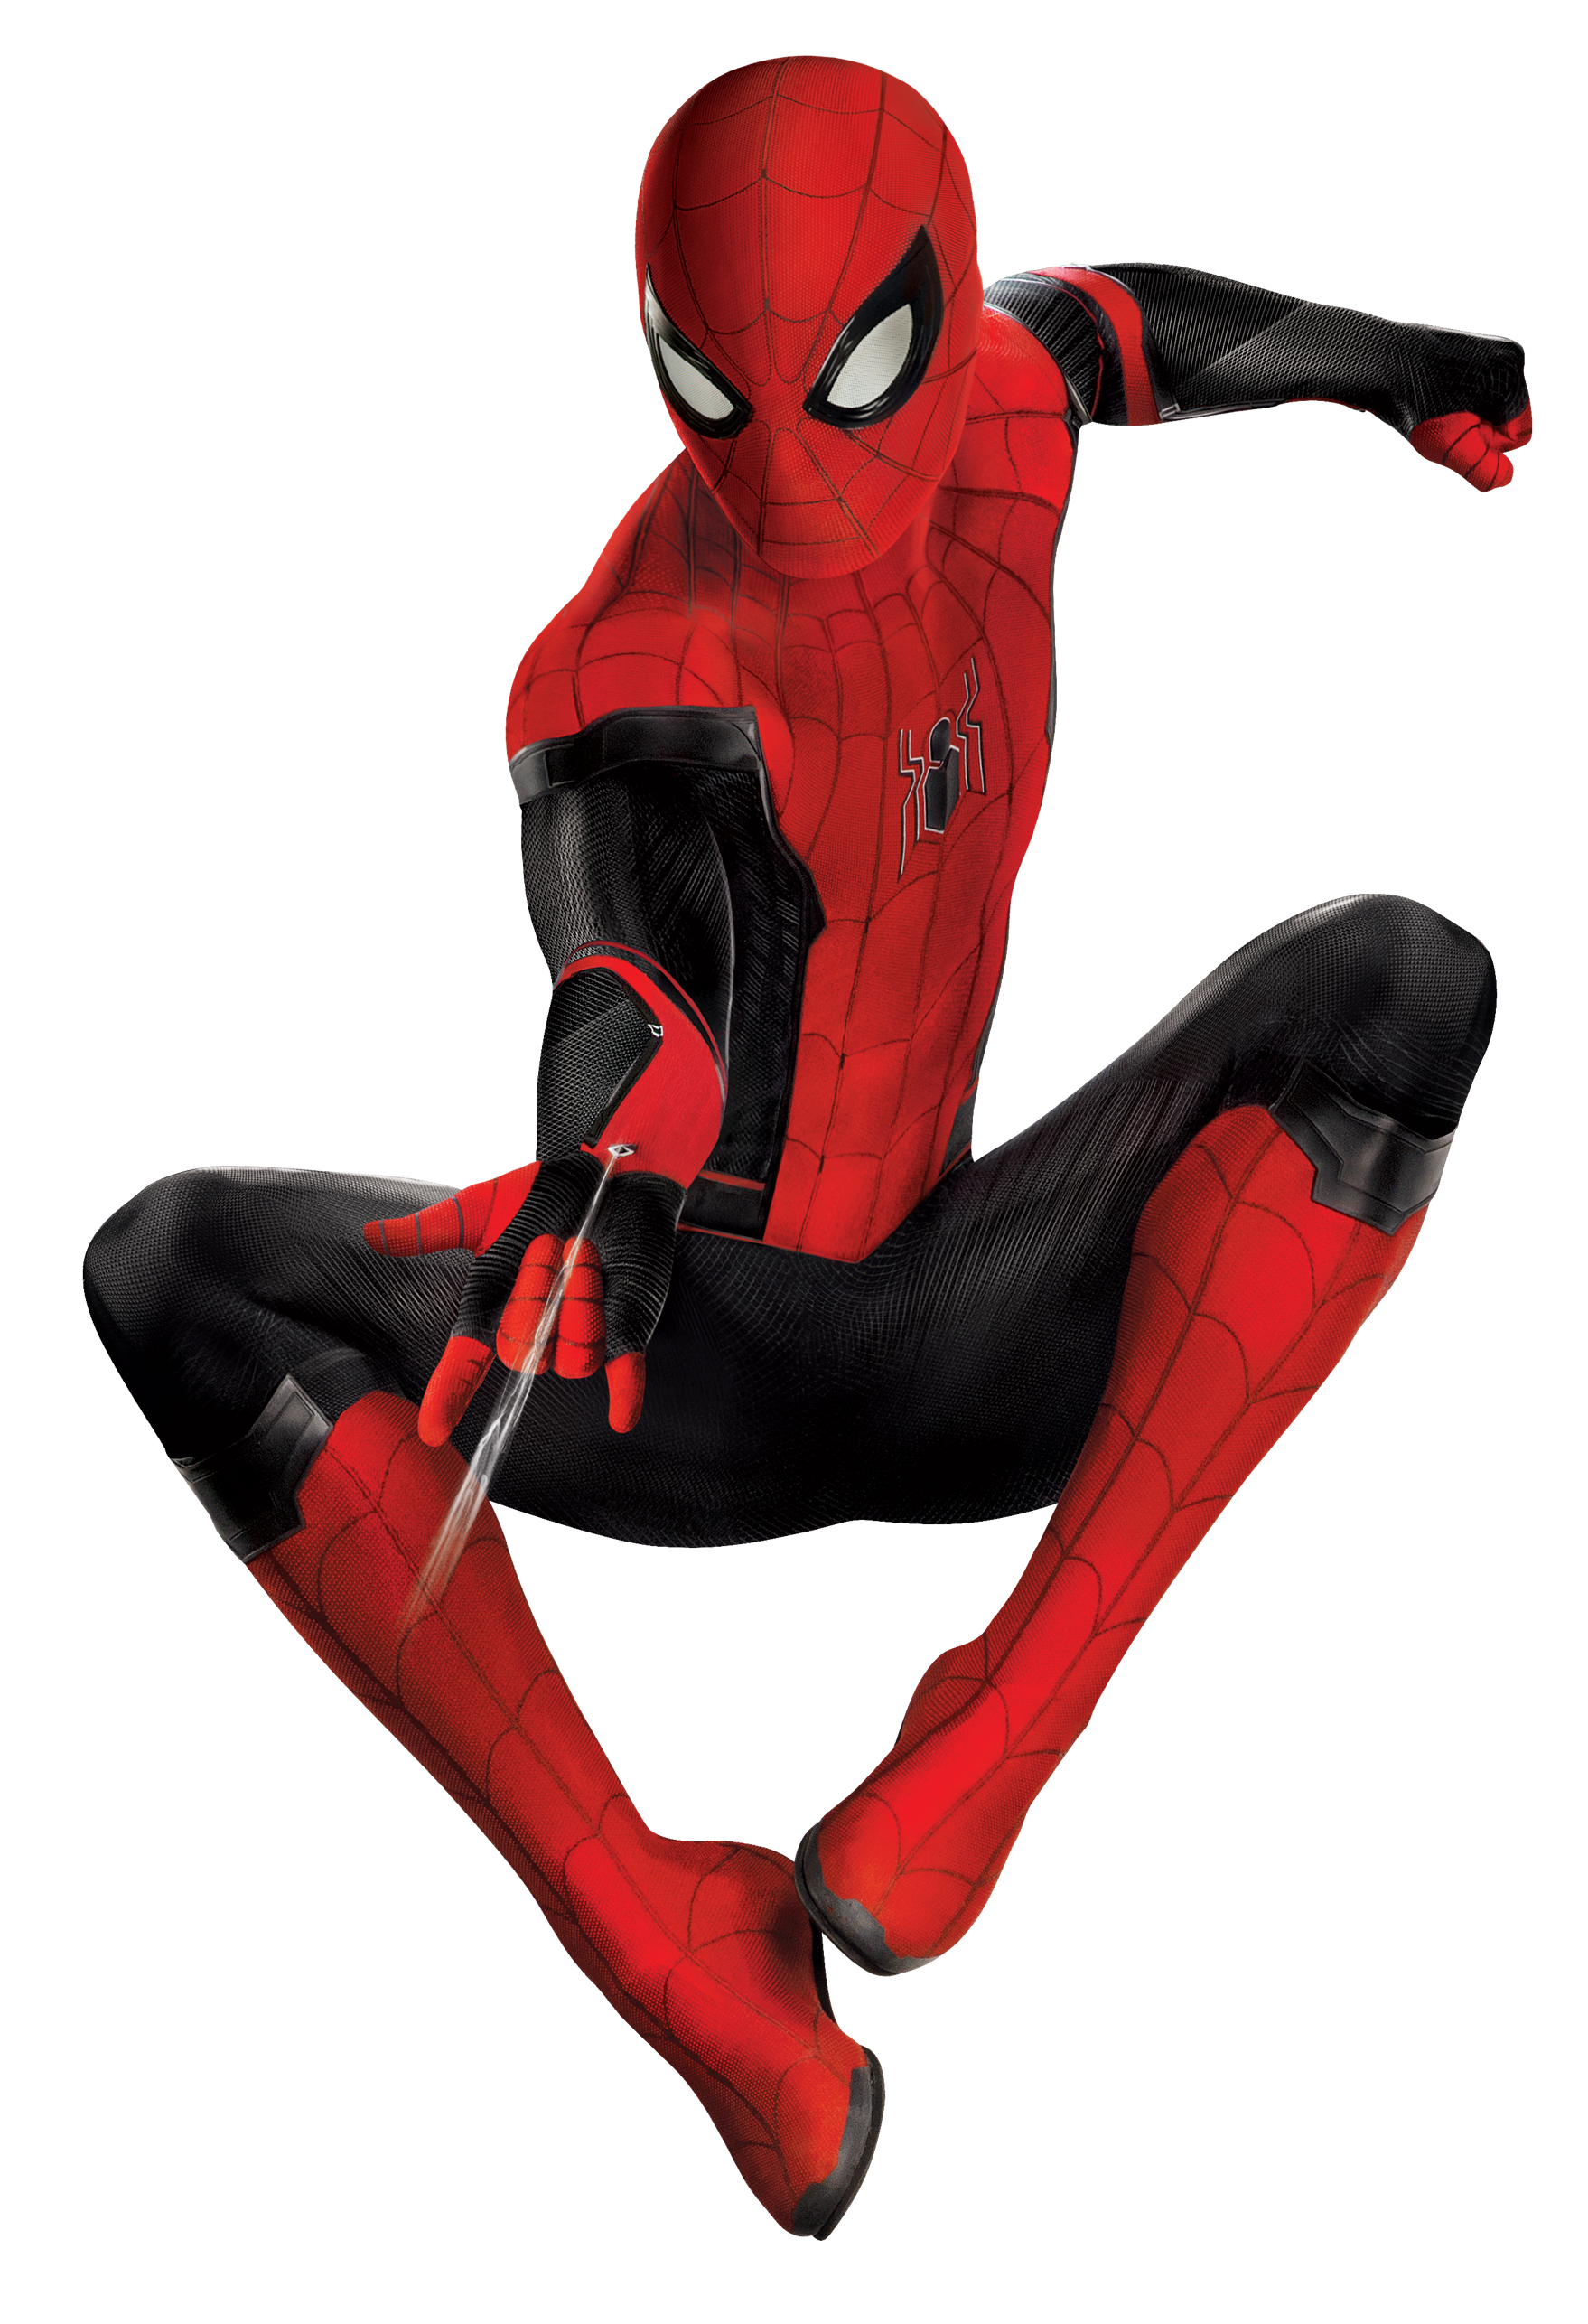 Spider Man Suit. Marvel Cinematic Universe